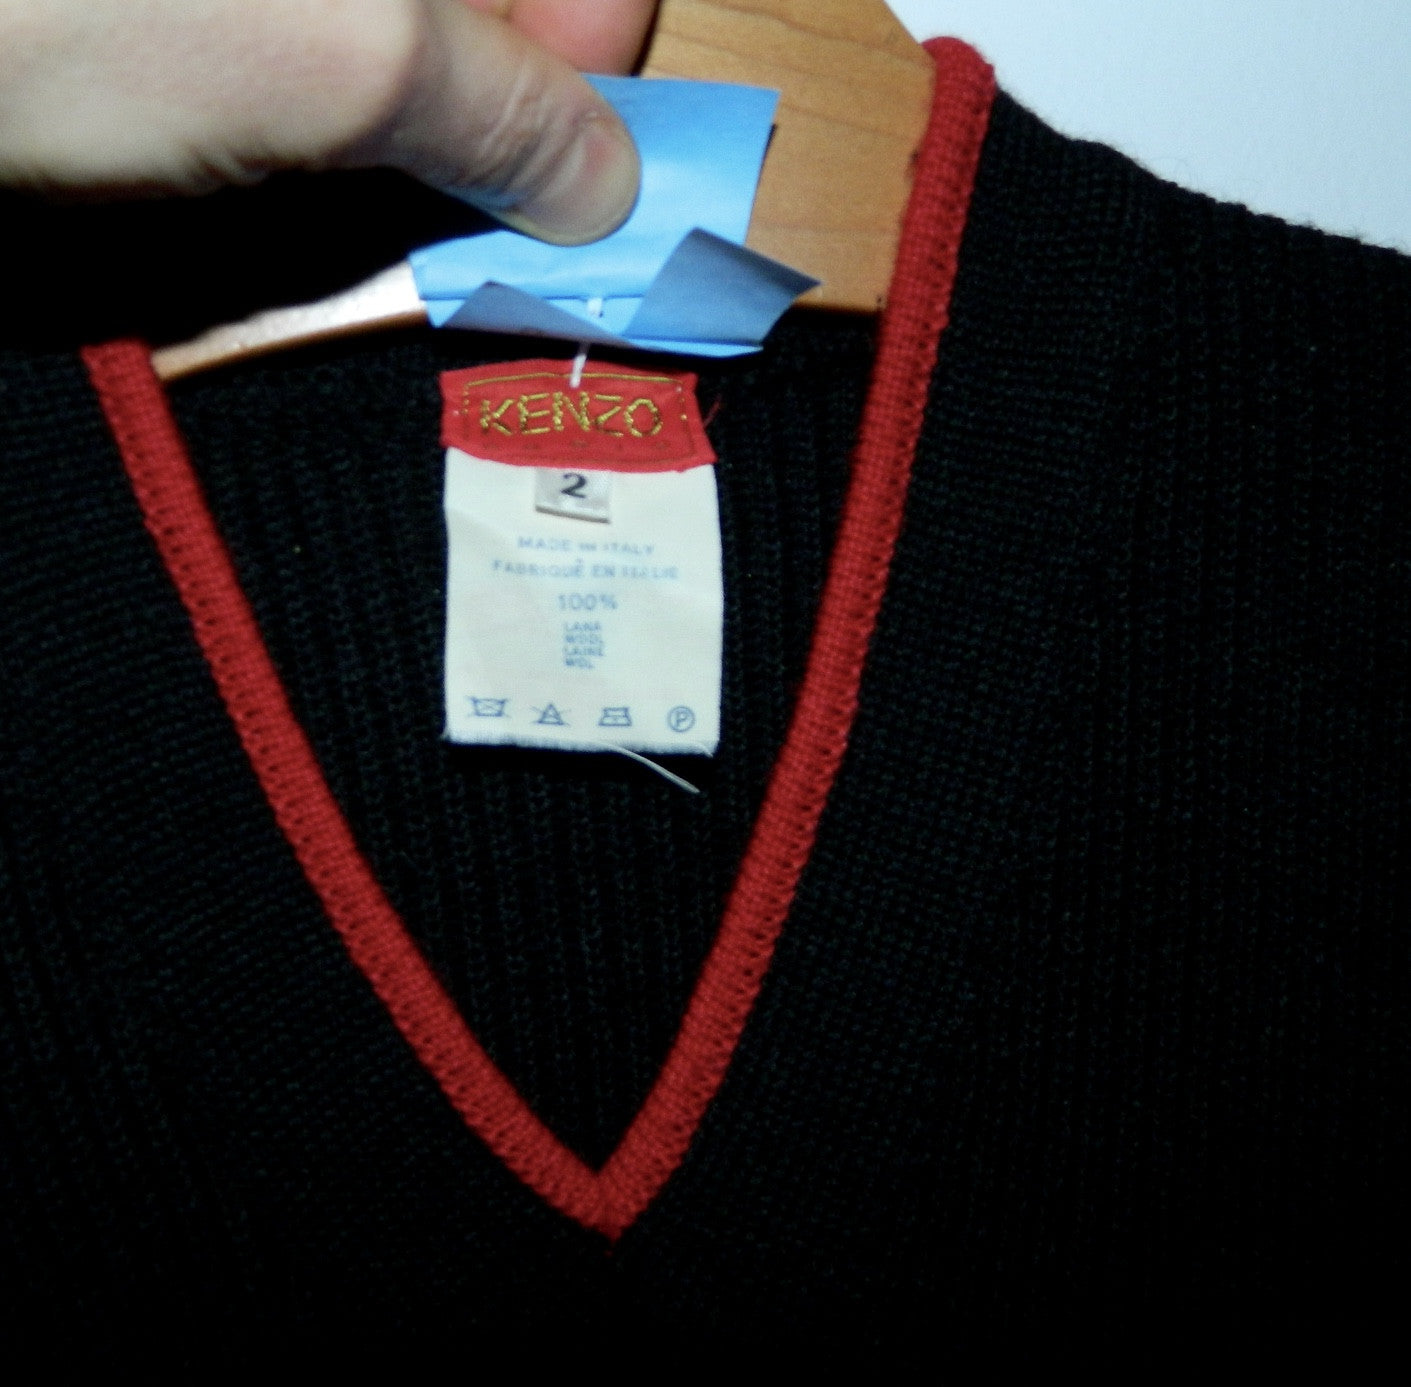 vintage KENZO sweater black wool ribbed knit top red trim 1980s designer